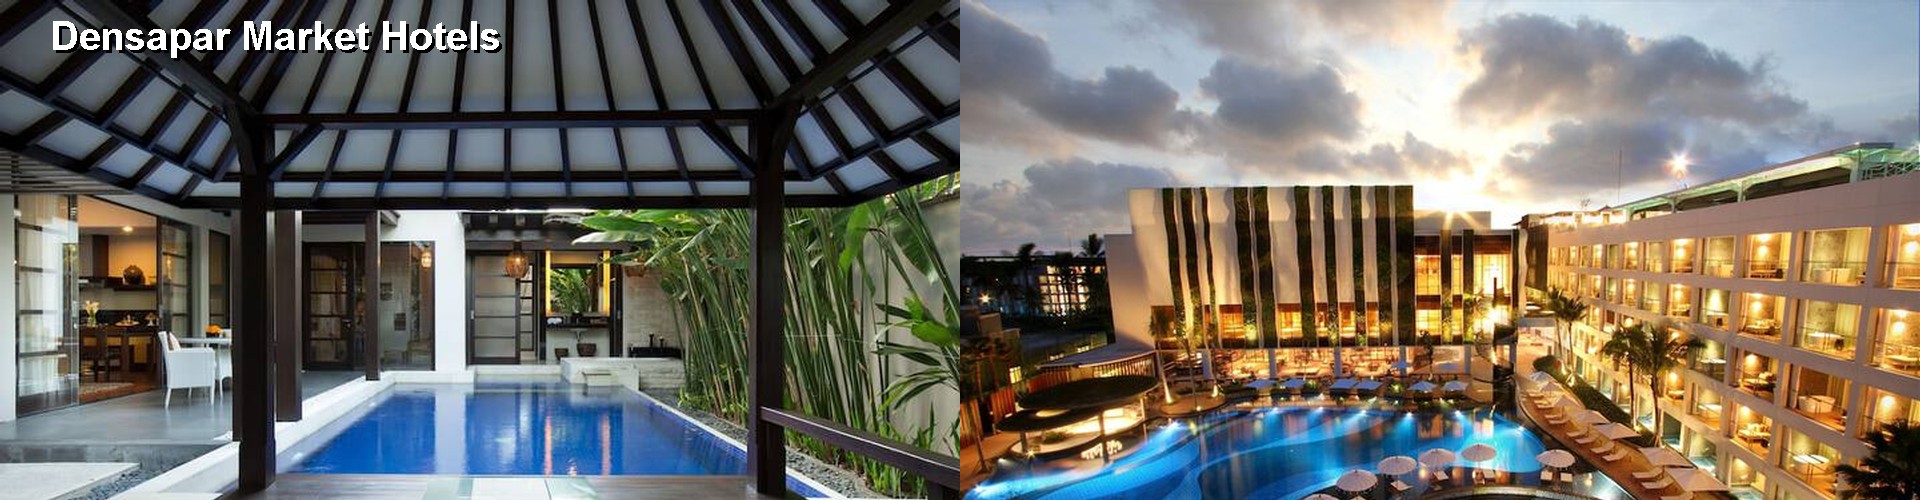 5 Best Hotels near Densapar Market